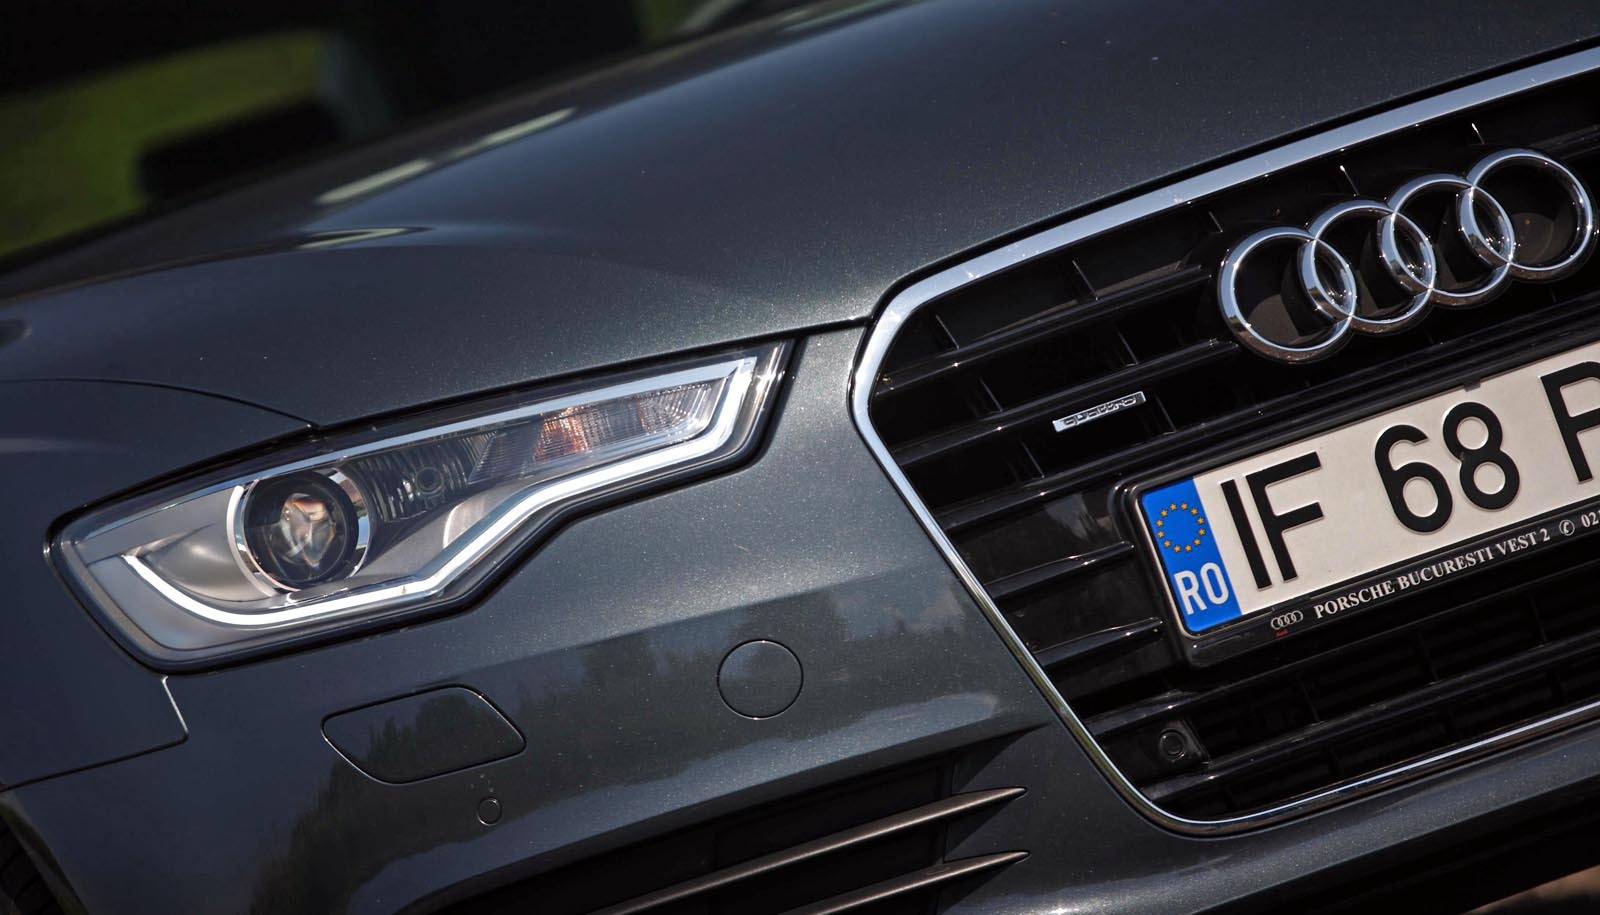 Per total, noul Audi A6 reprezinta o evolutie laudabila fata de precedenta generatie